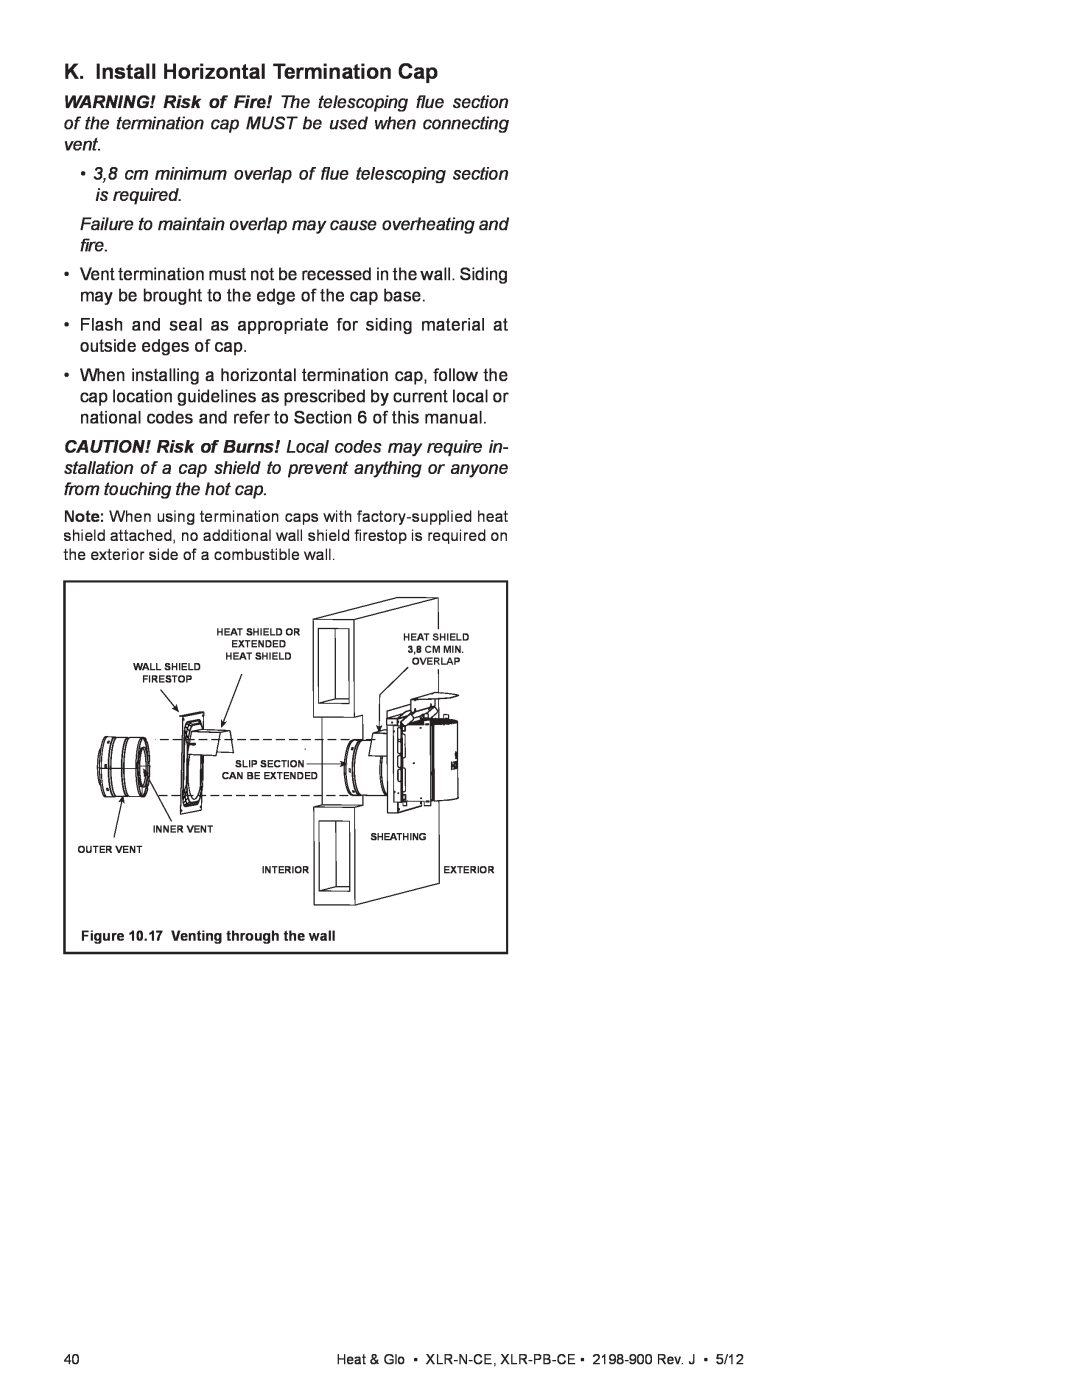 Heat & Glo LifeStyle XLR-N-CE, XLR-PB-CE manual K. Install Horizontal Termination Cap, 17 Venting through the wall 